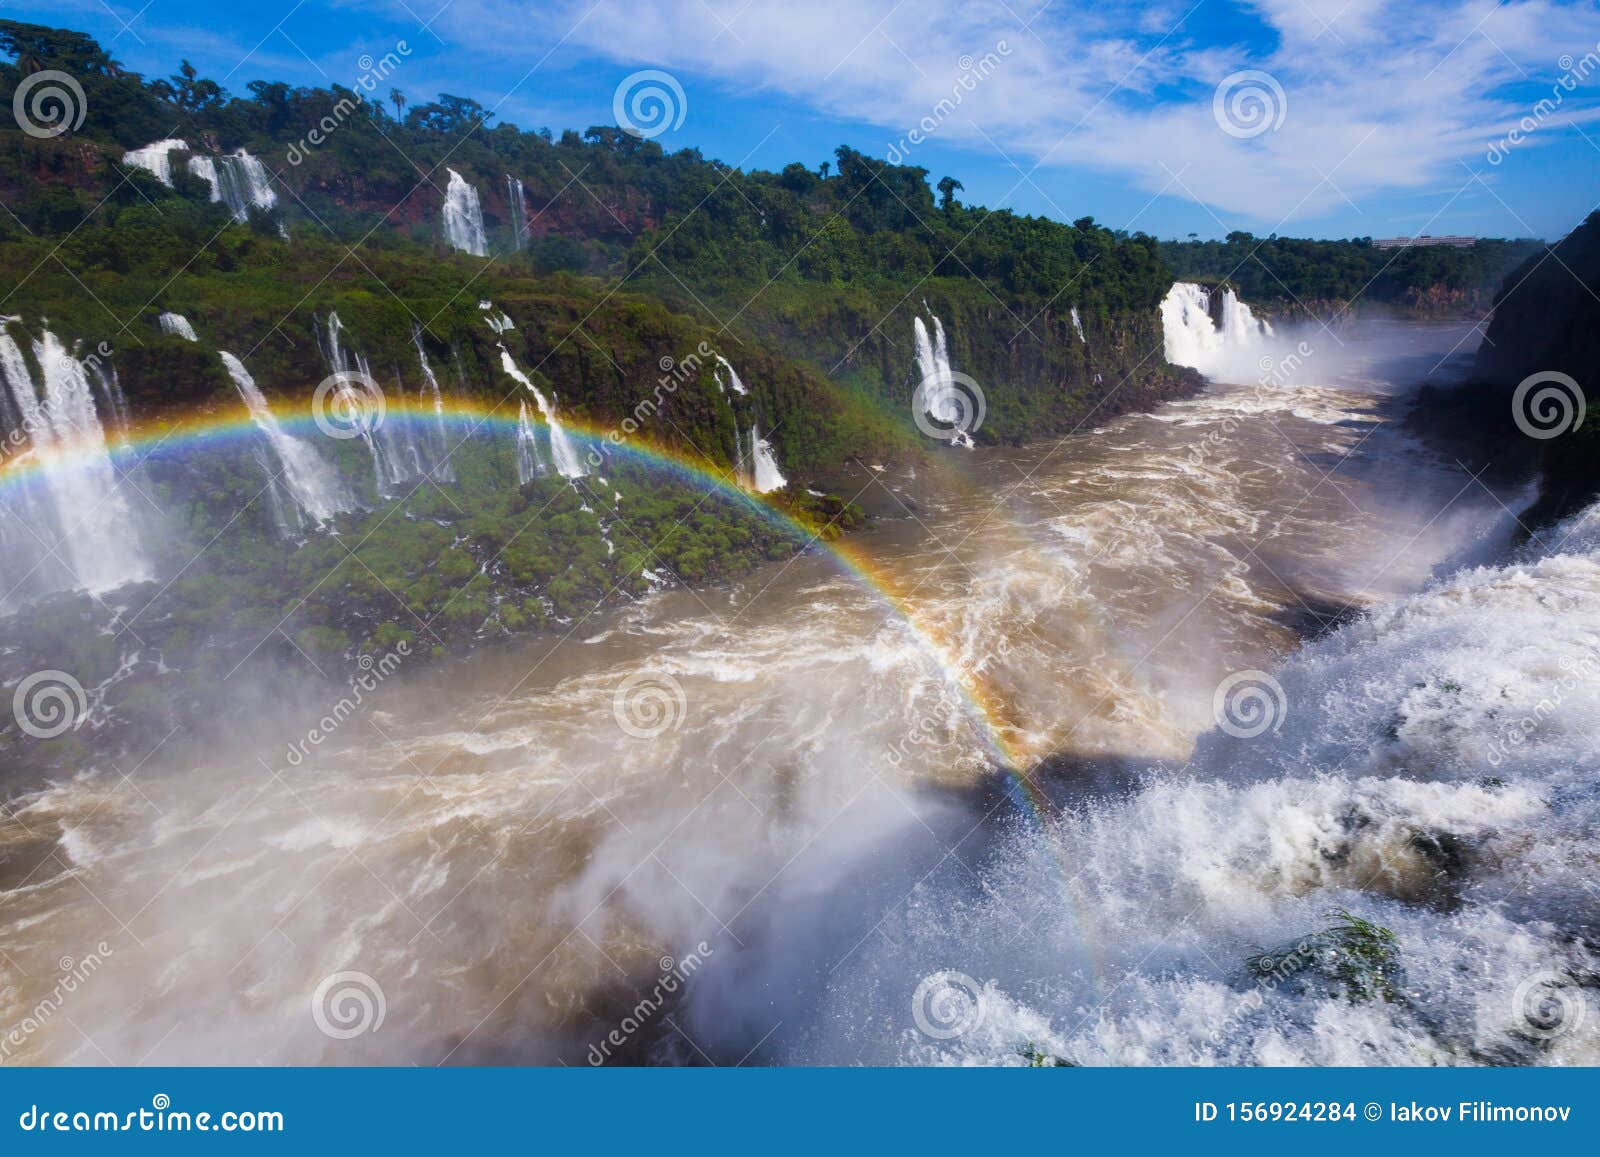 rainbow over cataratas del iguazu waterfall, brazil